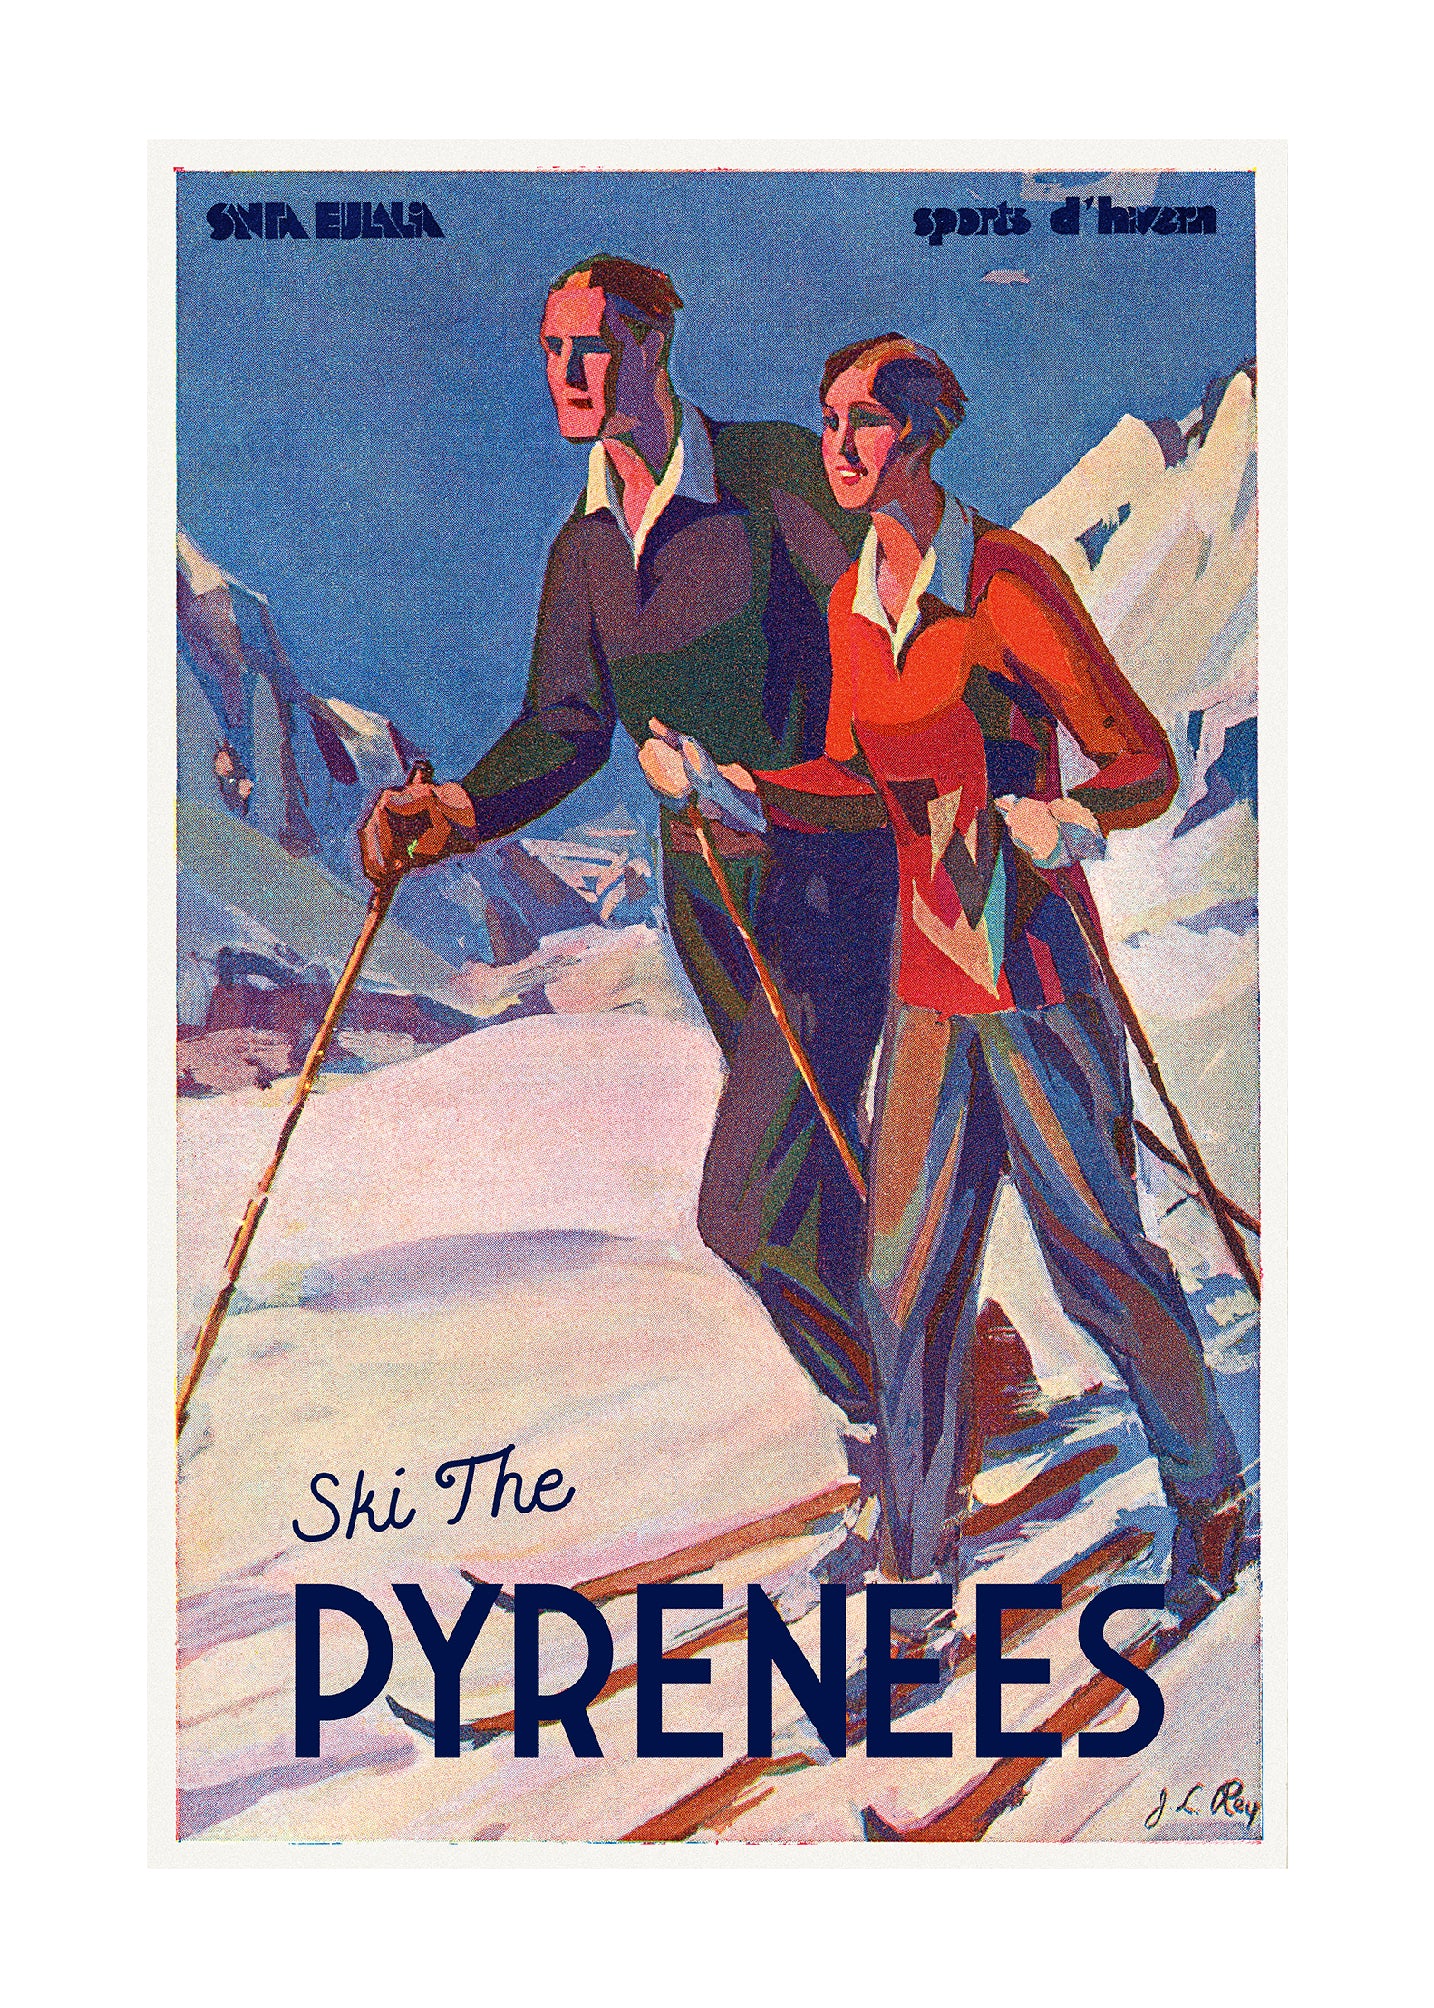 Lovers on Skis, Santa Eulalia, The Pyrenees.